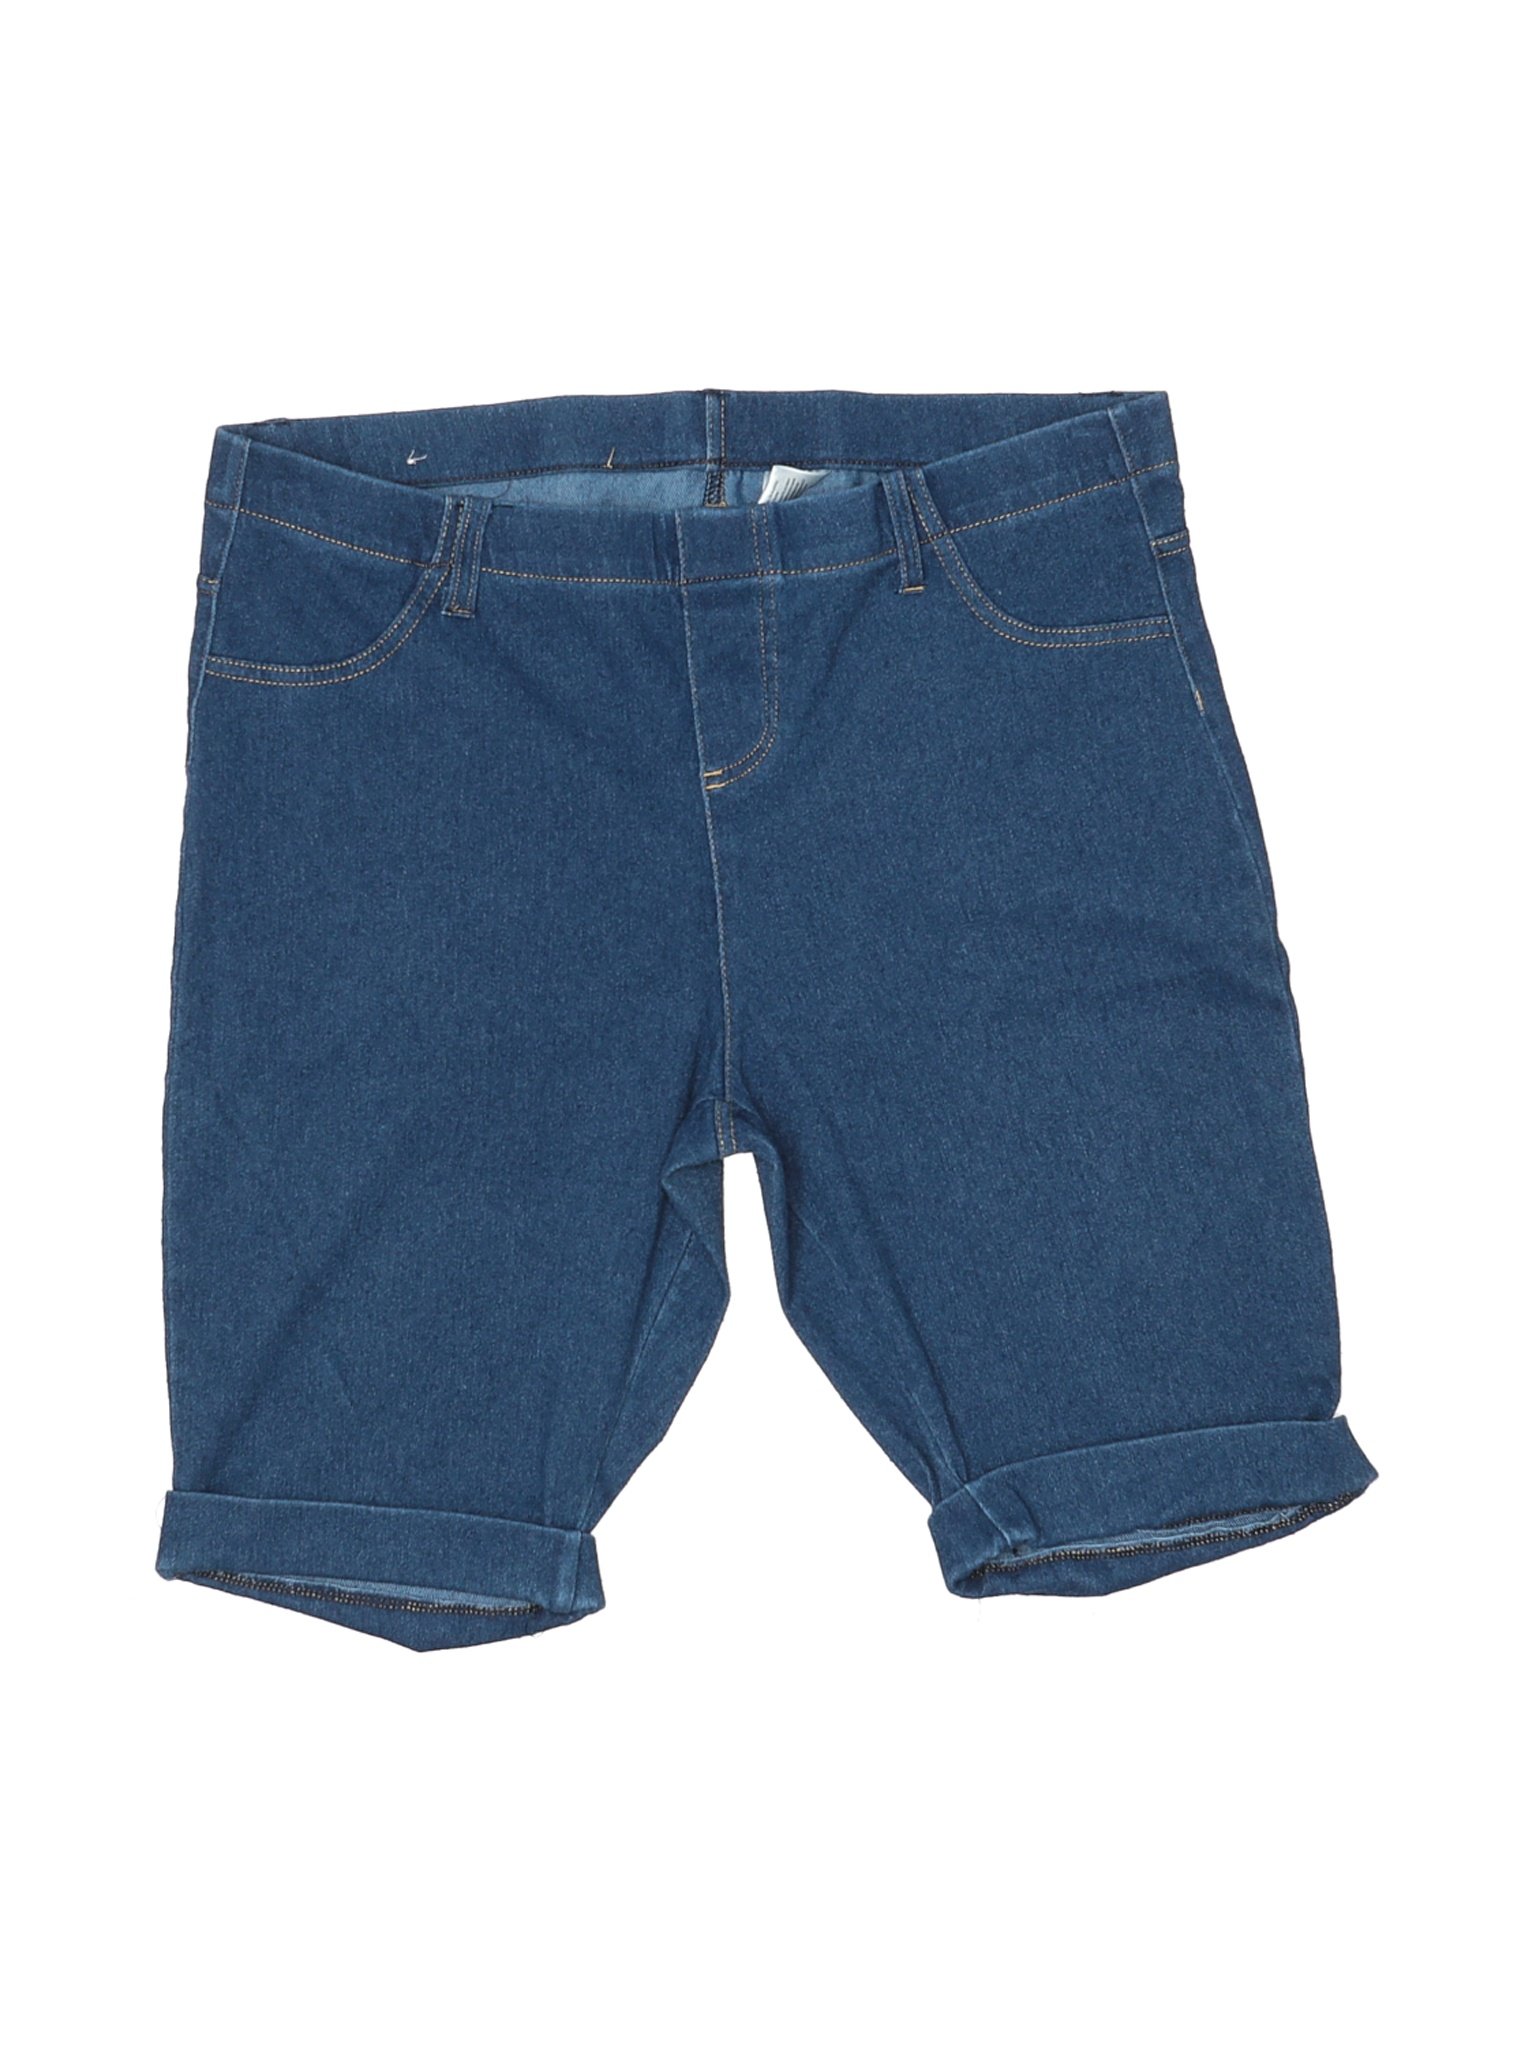 Serra Women Blue Denim Shorts L | eBay